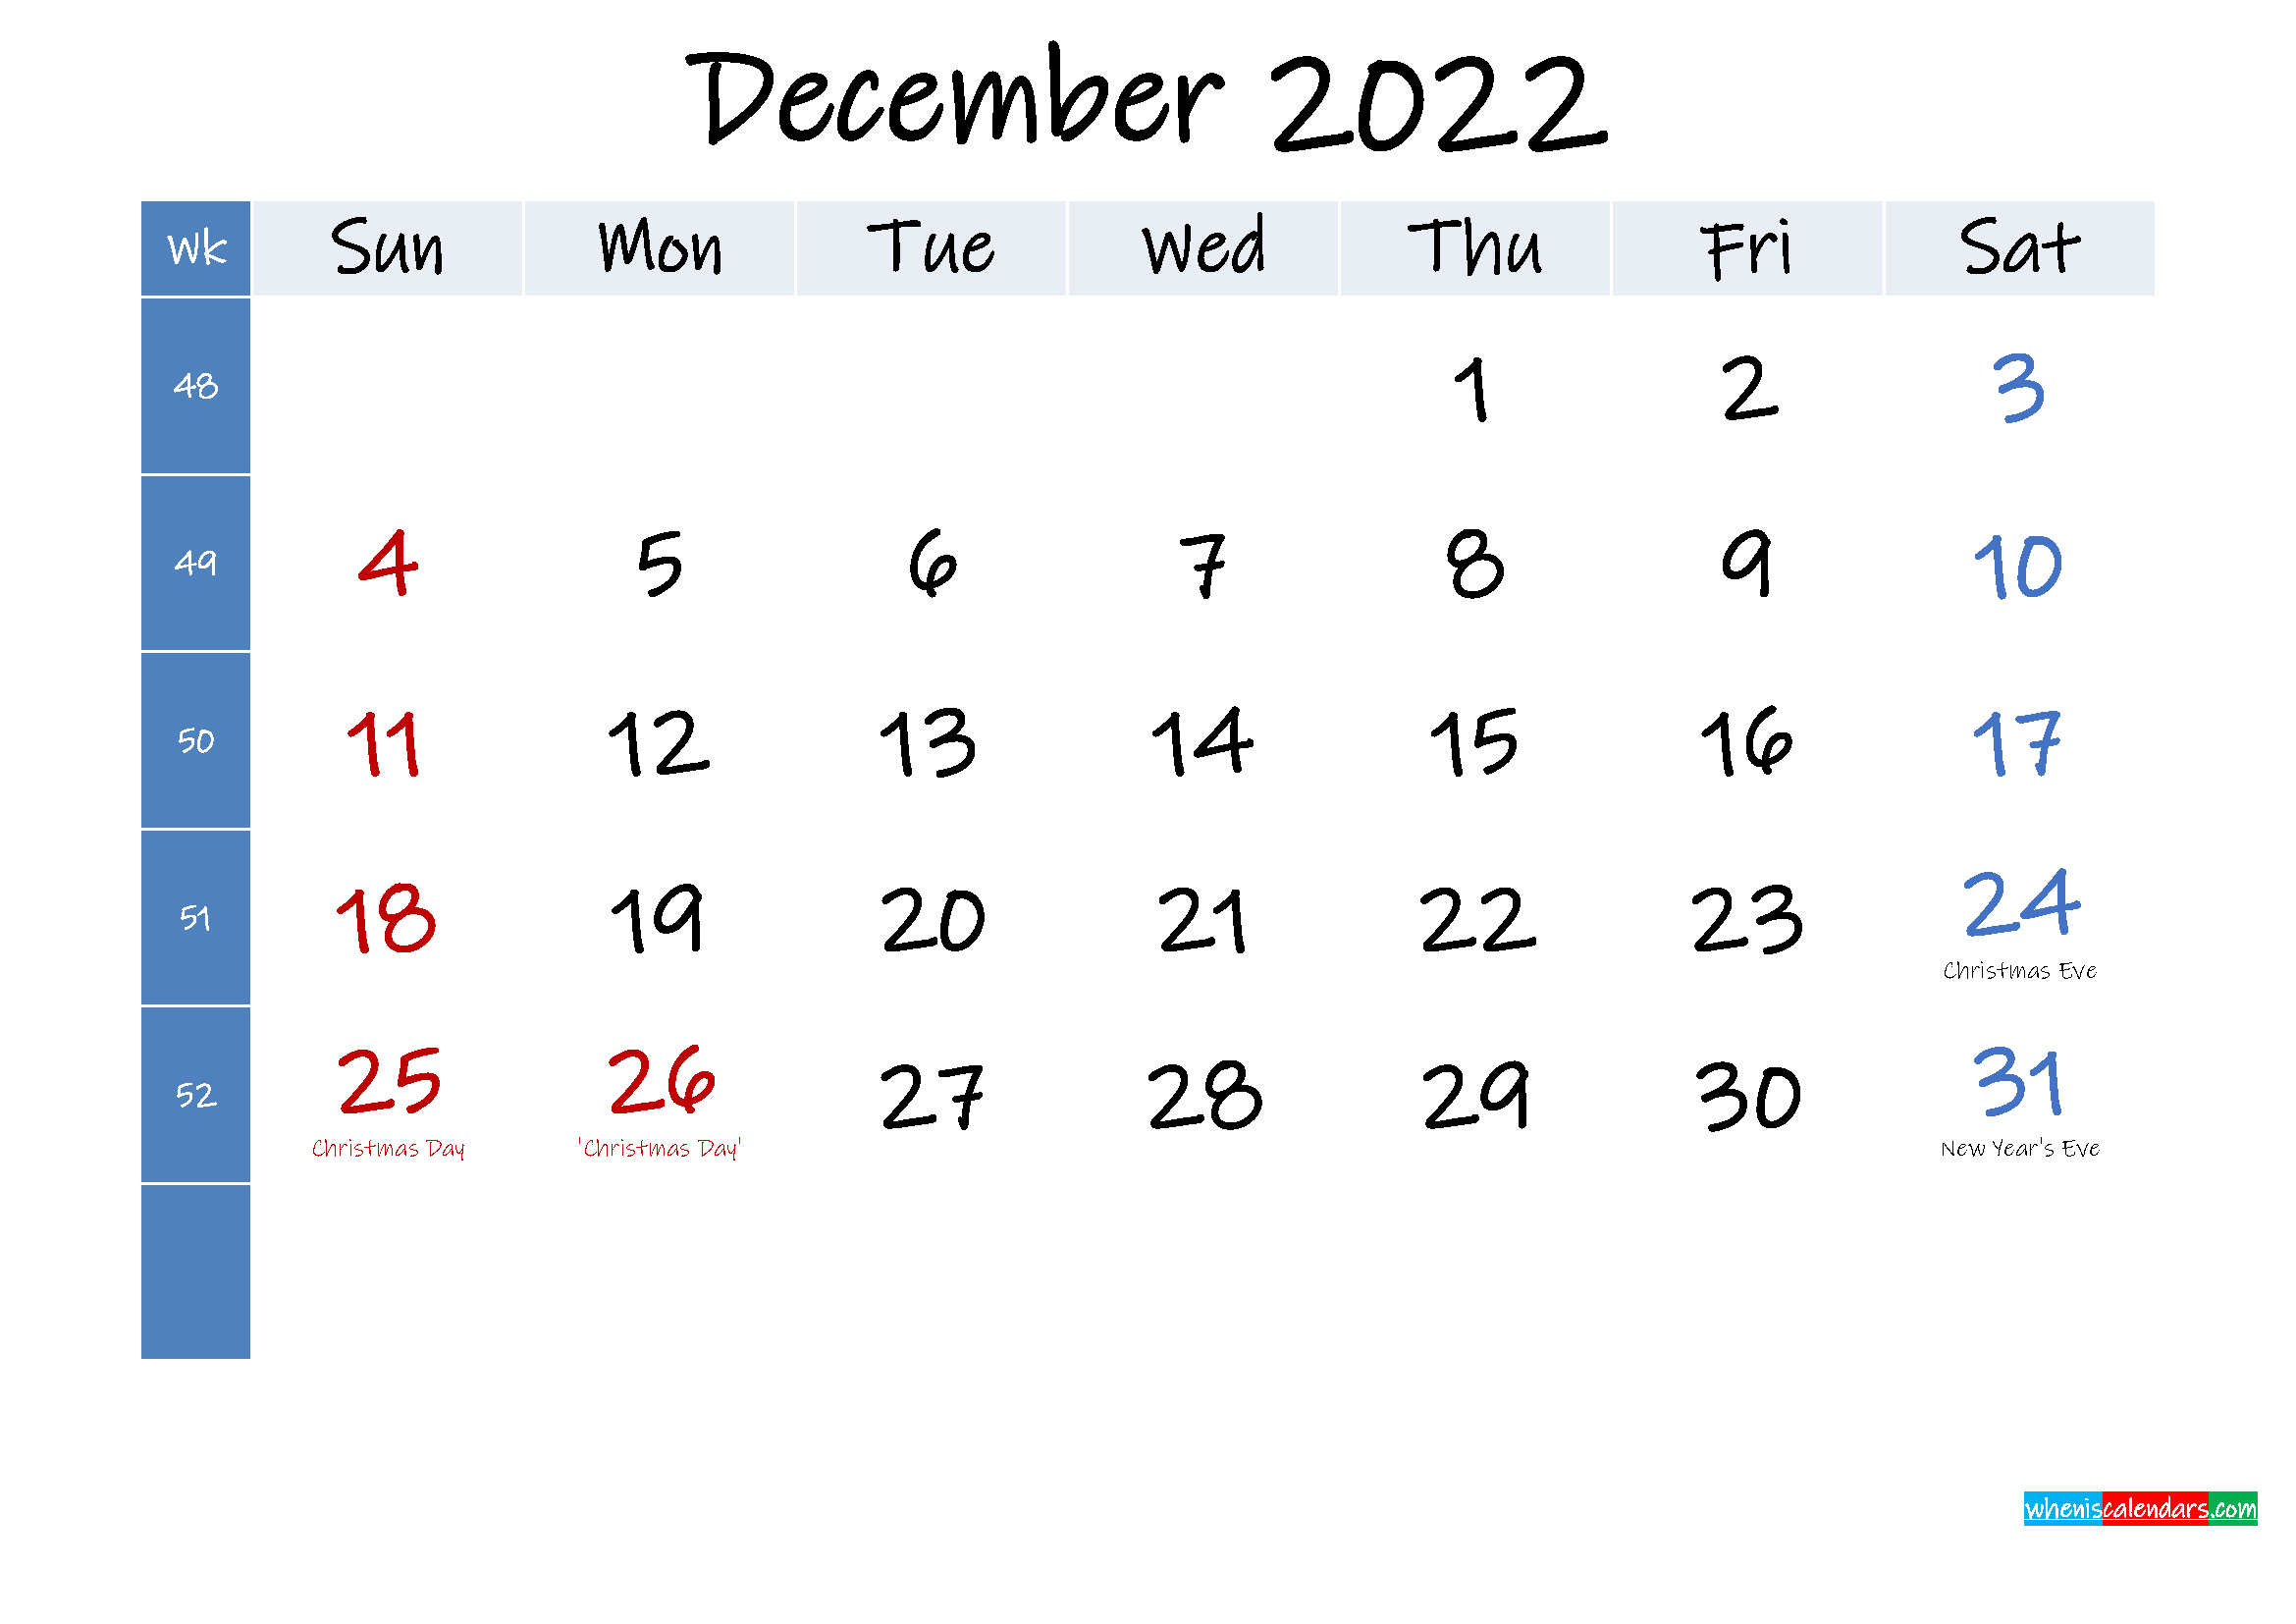 December 2022 Free Printable Calendar With Holidays  Free Printable Calendar 2022 December